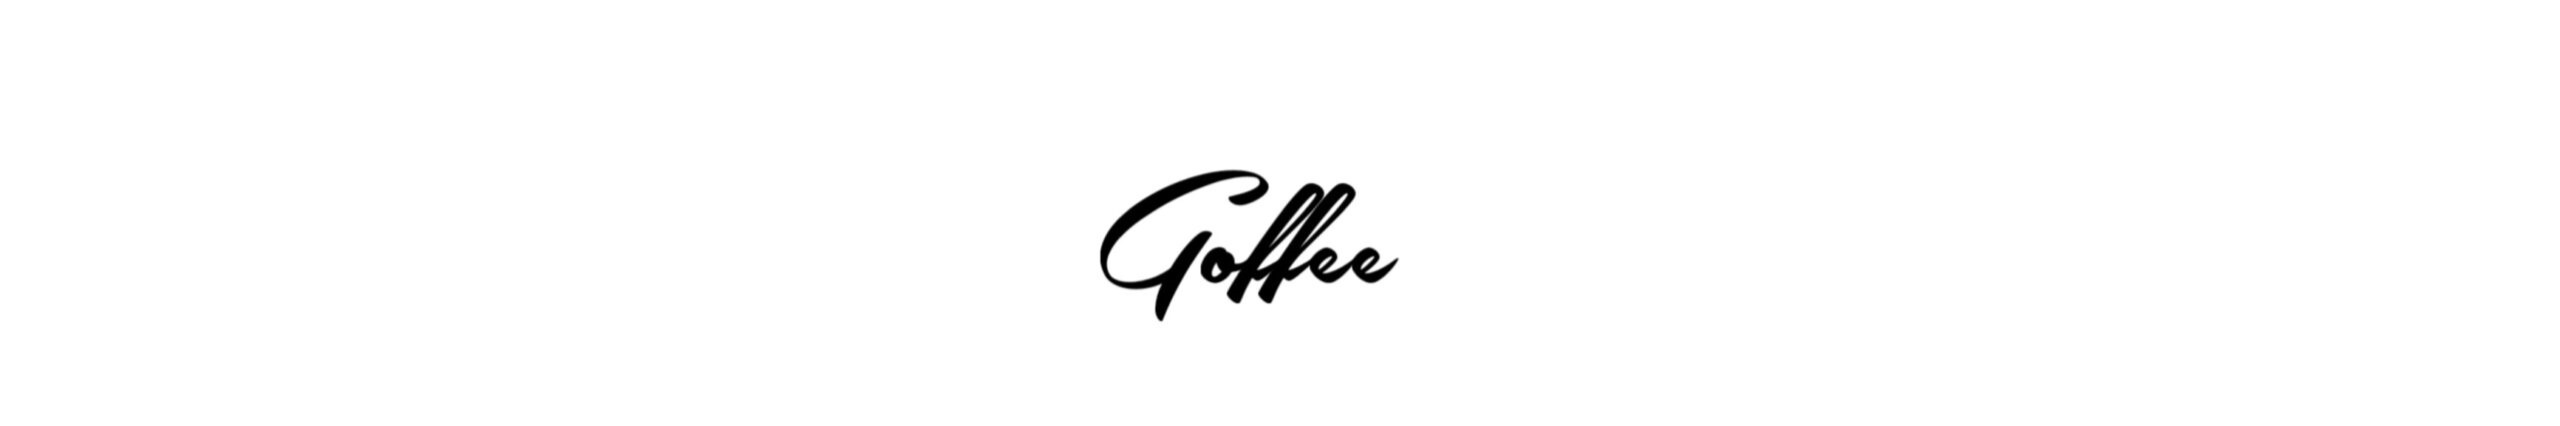 Goffee